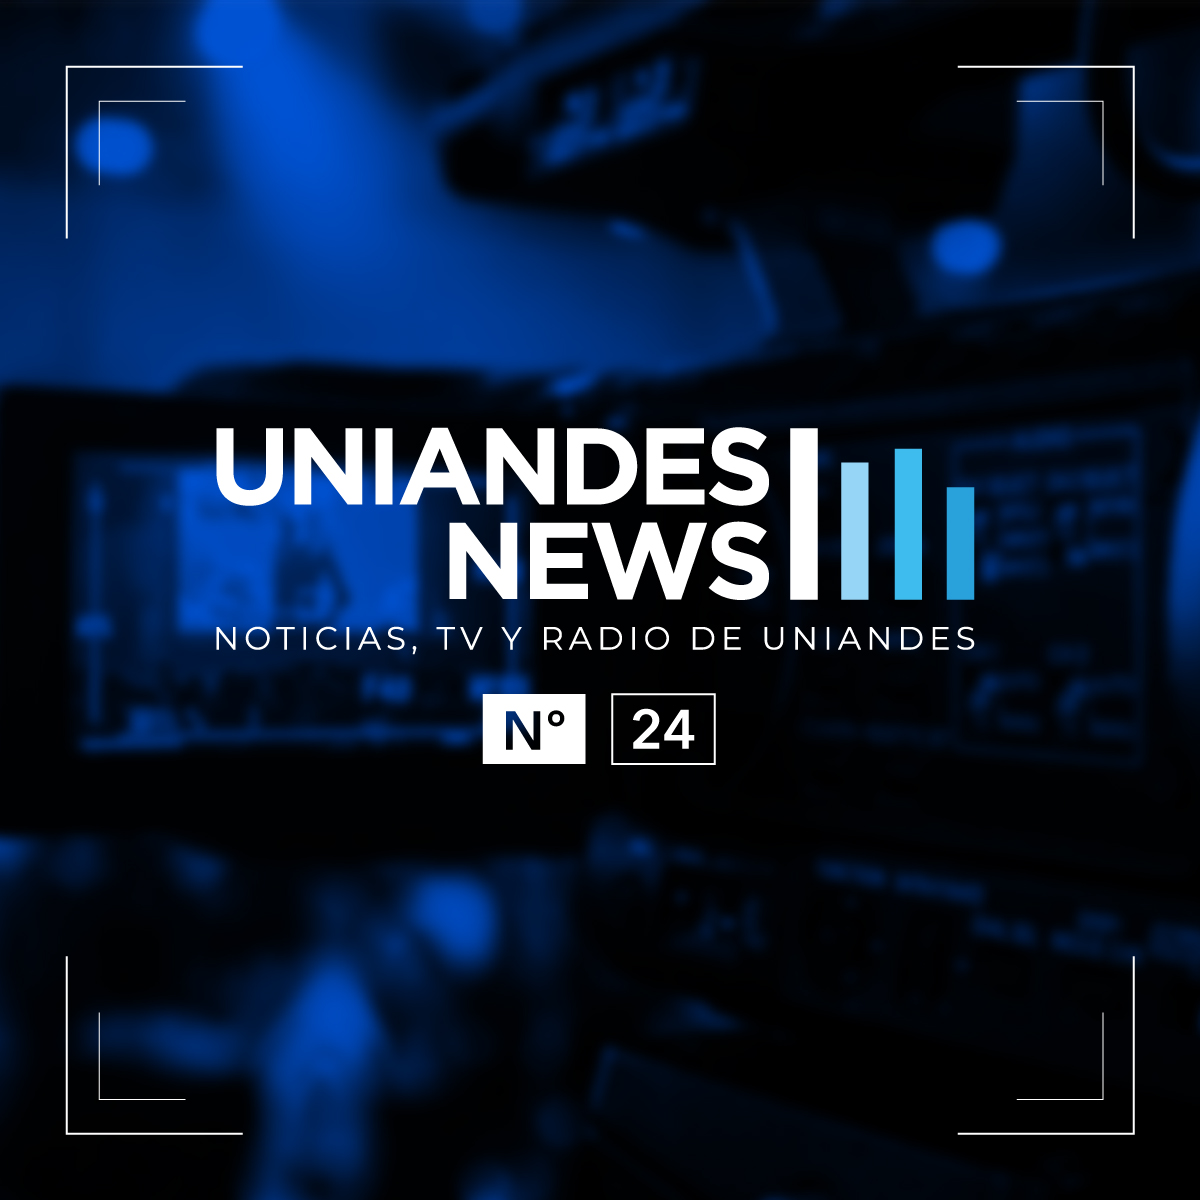 Uniandes news 24